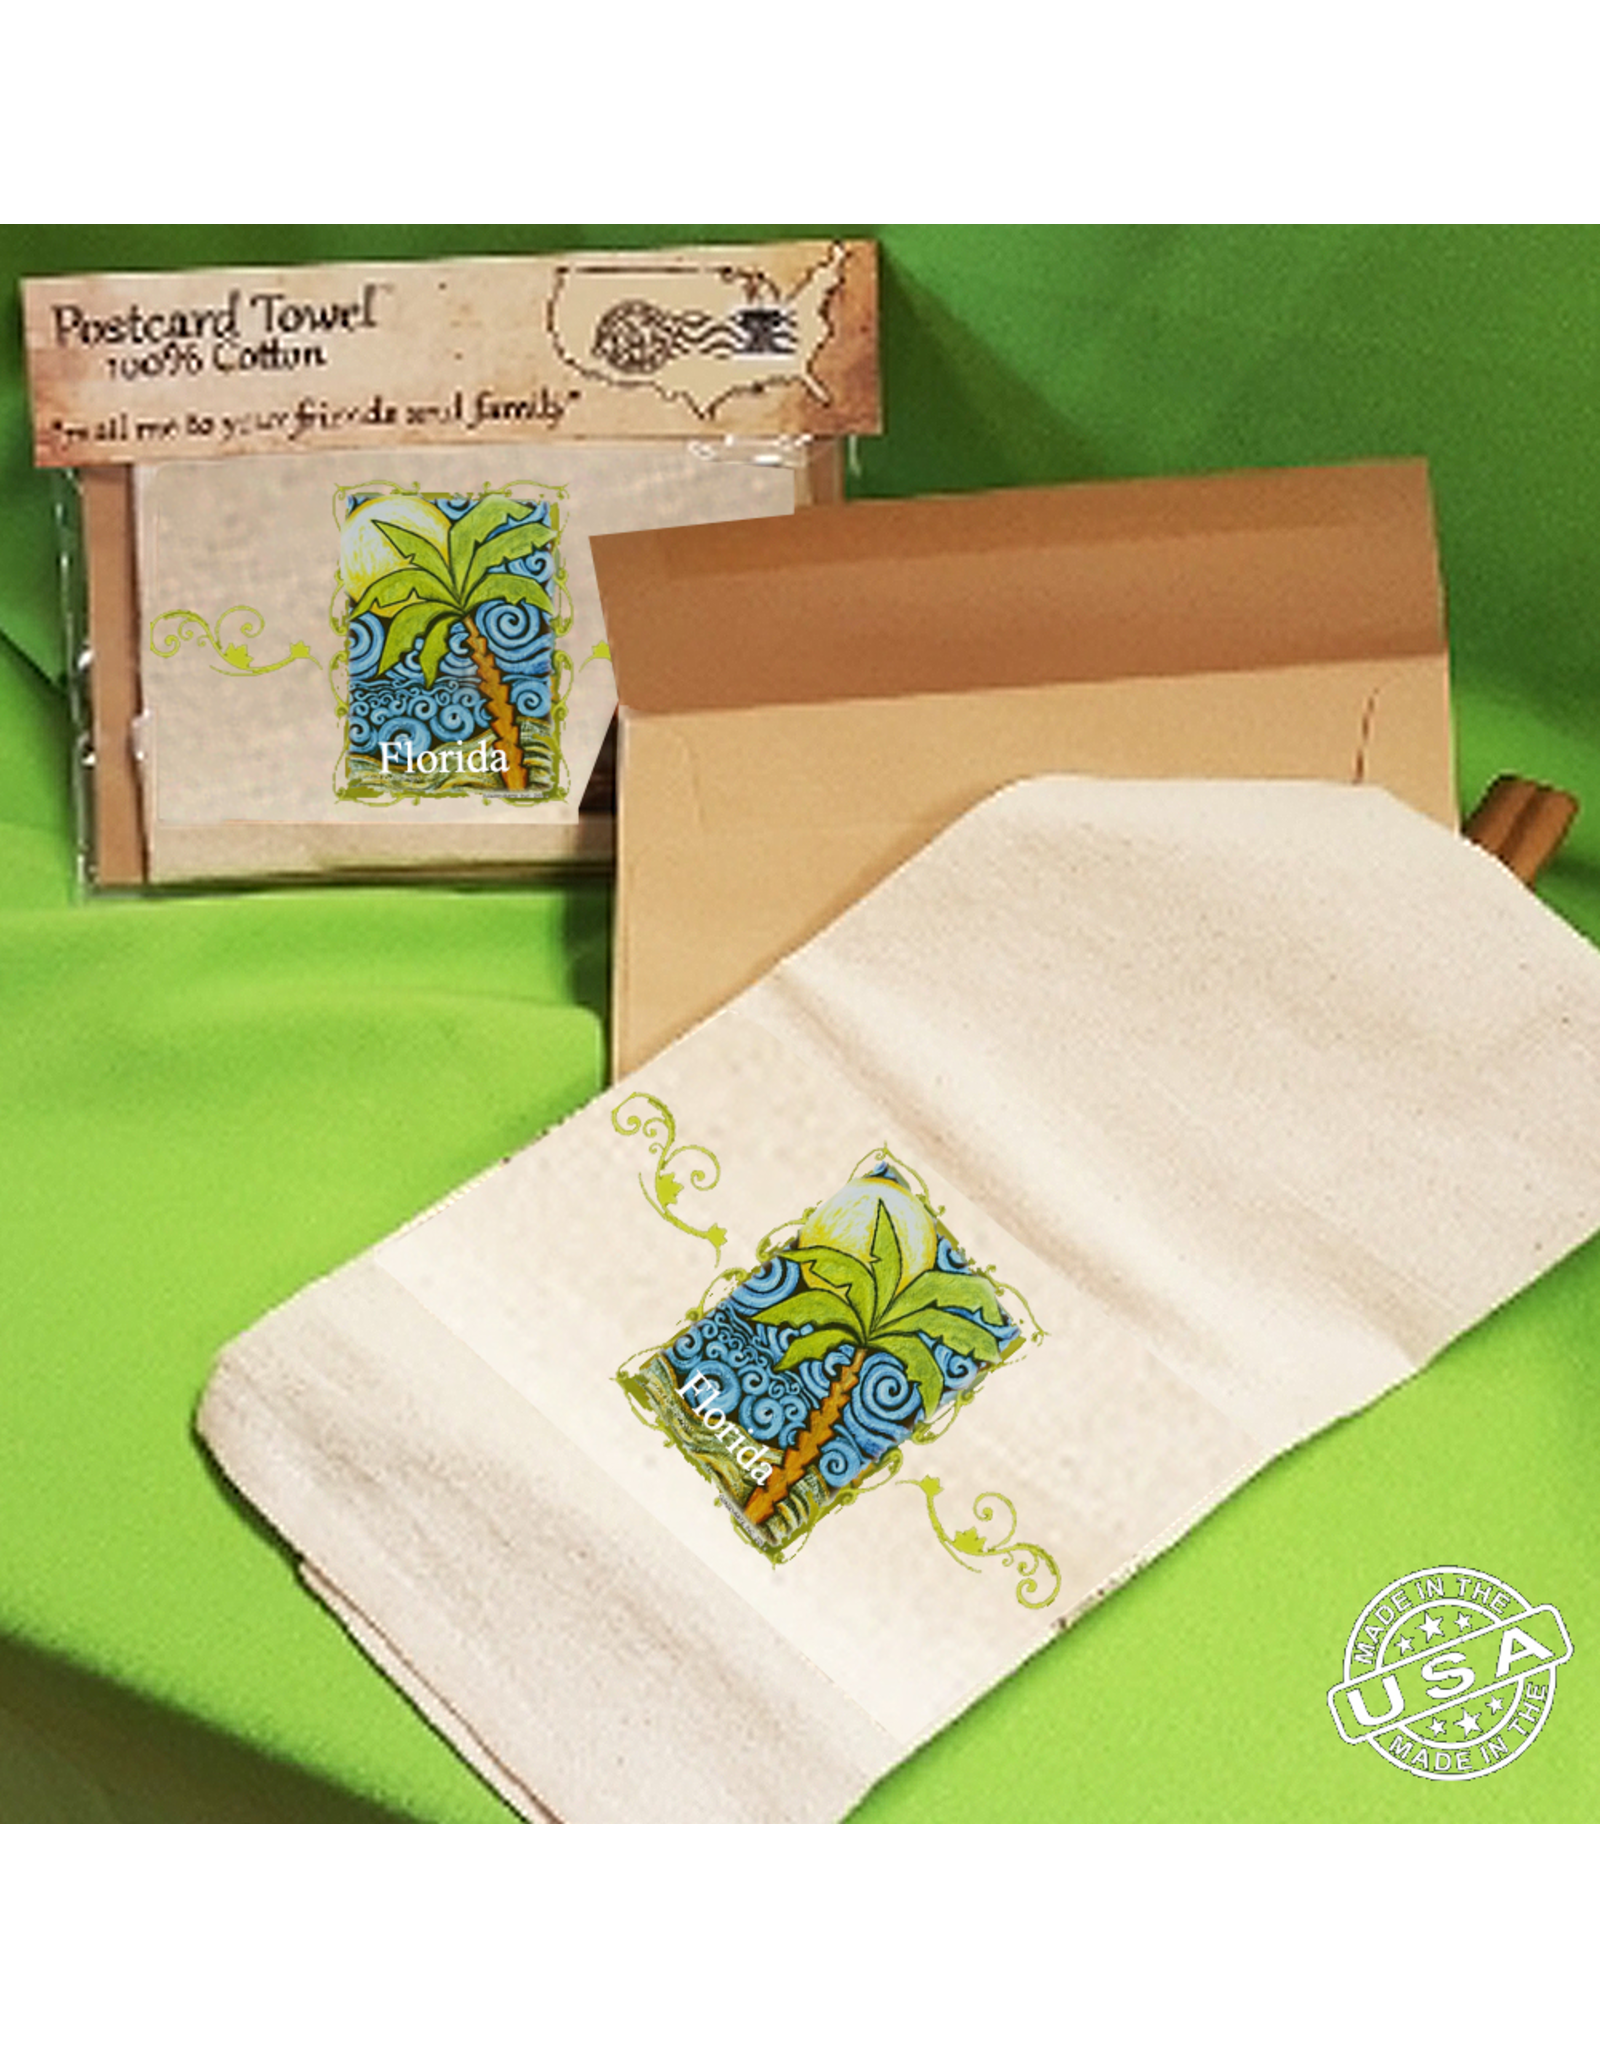 Postcard Towel Postcard Towel Mailable Tea Towels - Florida Sunrise Palm